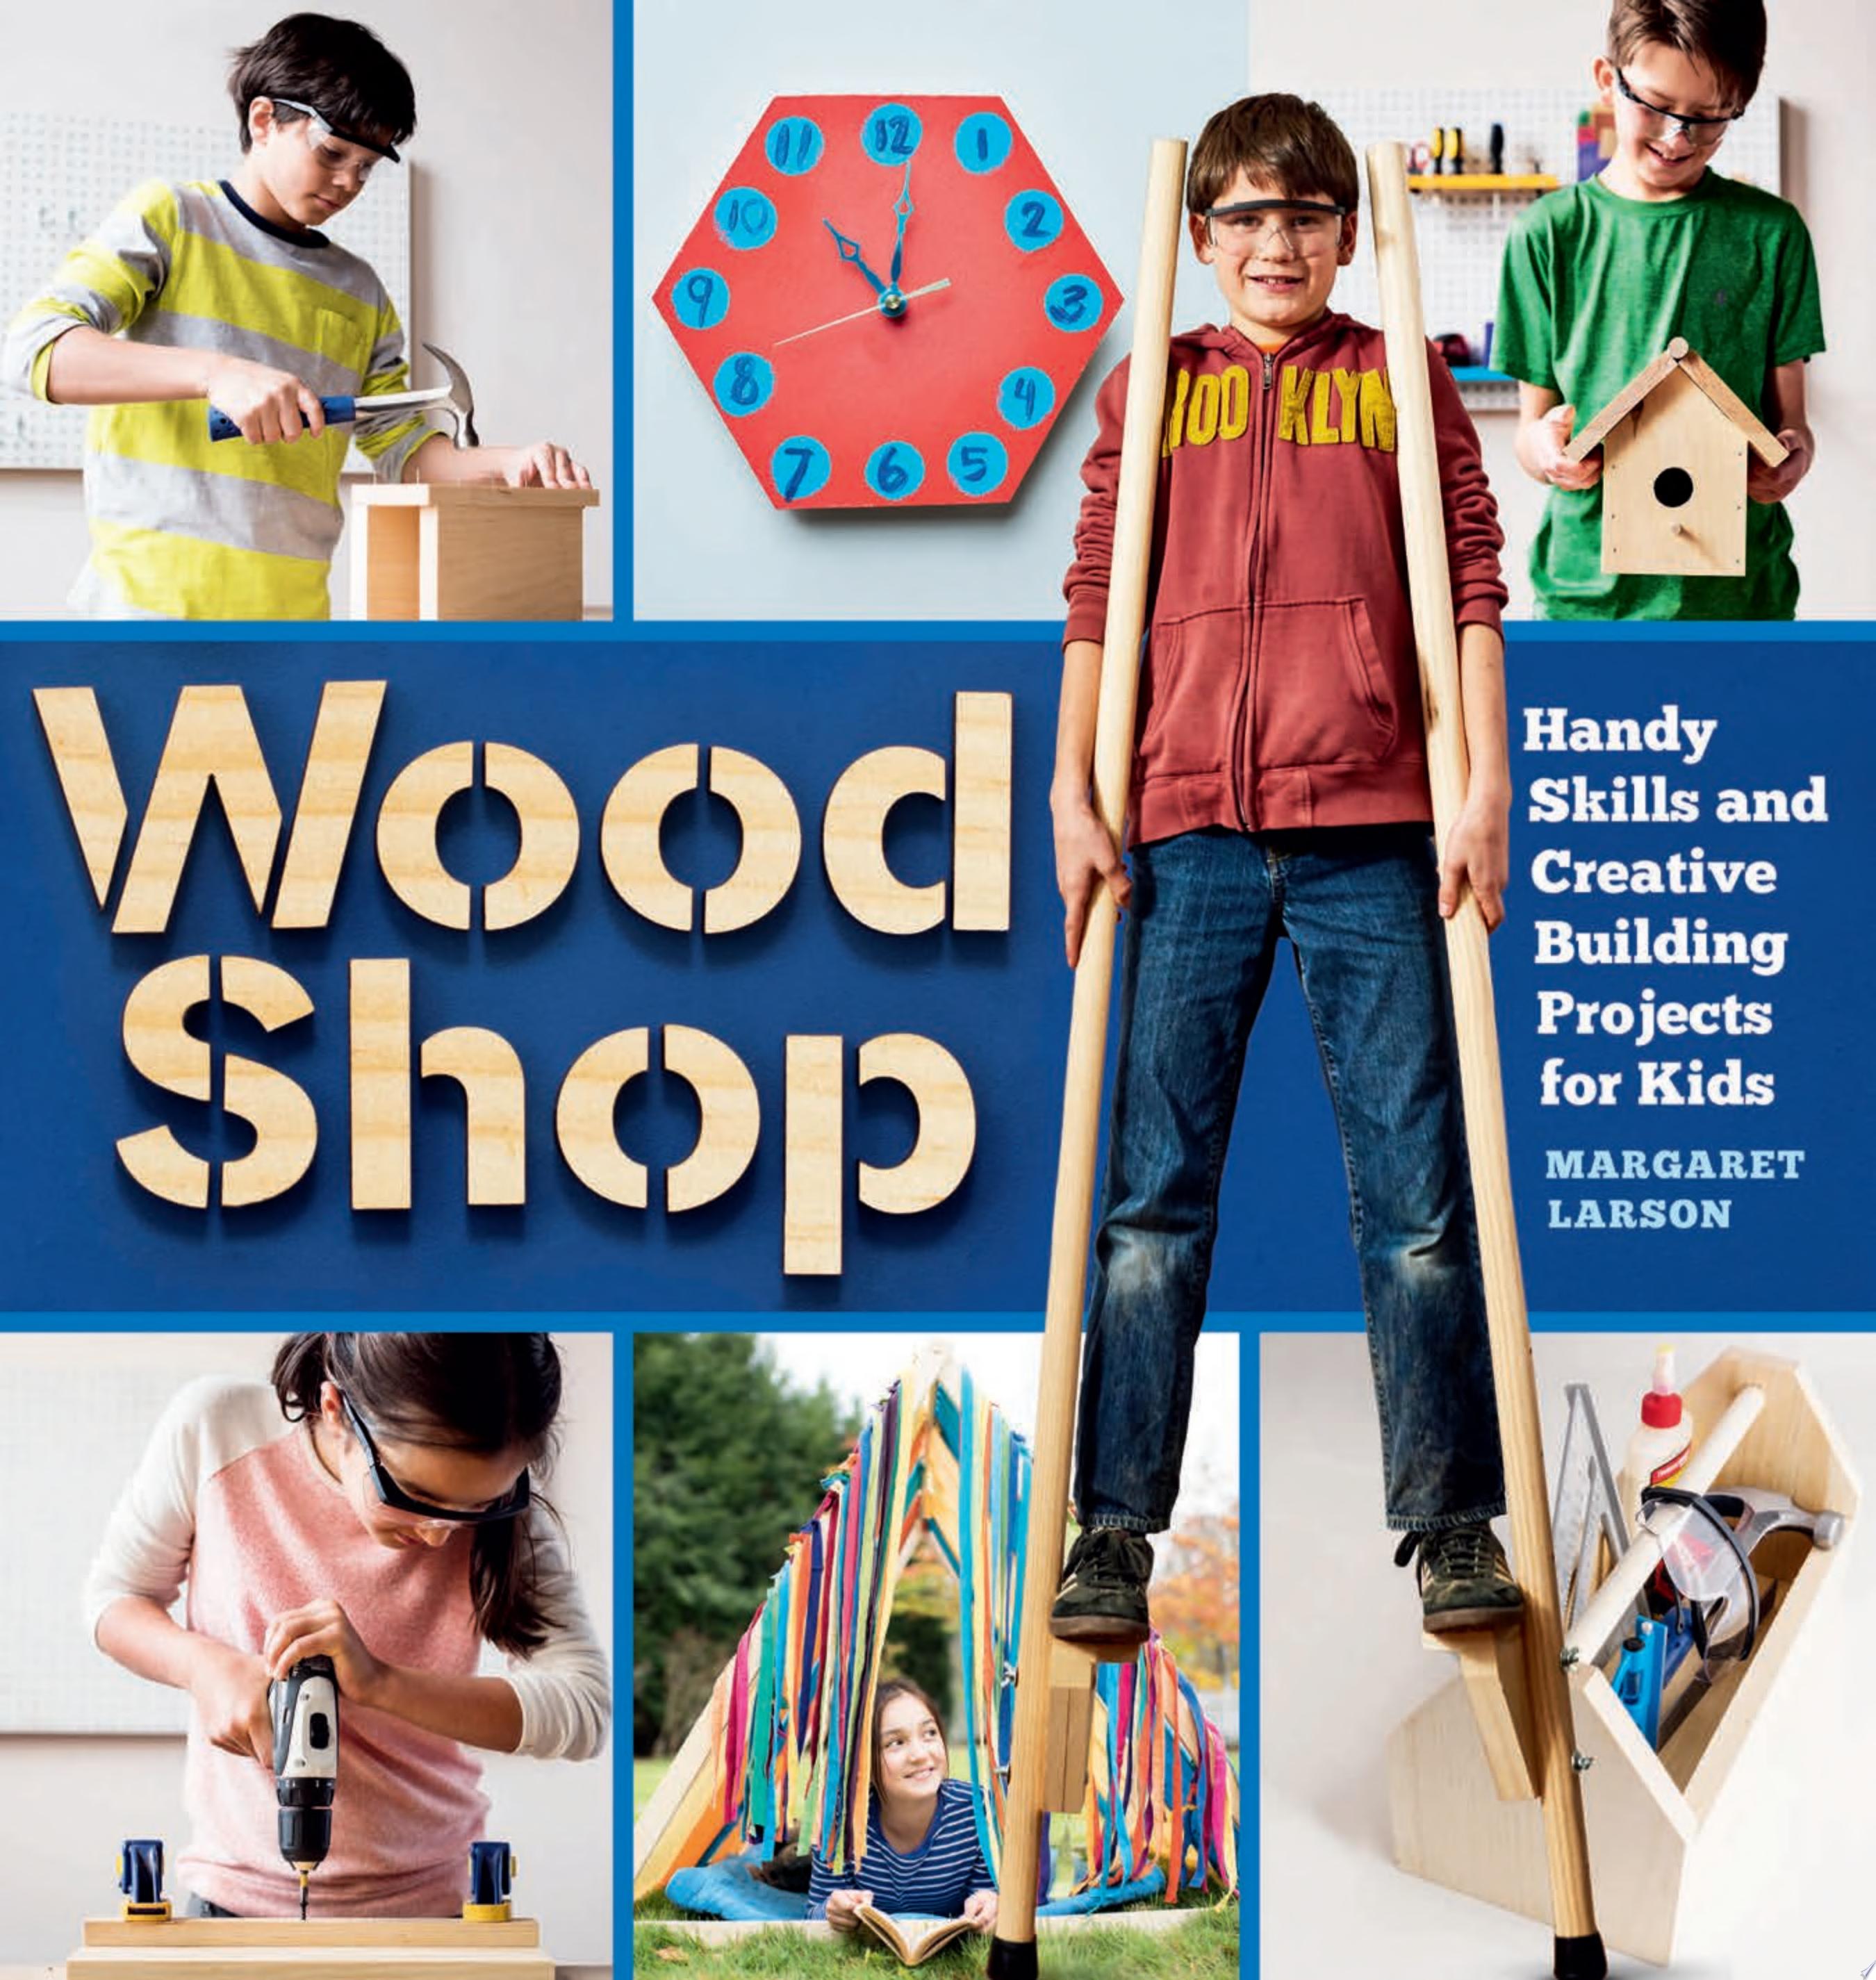 Image for "Wood Shop"